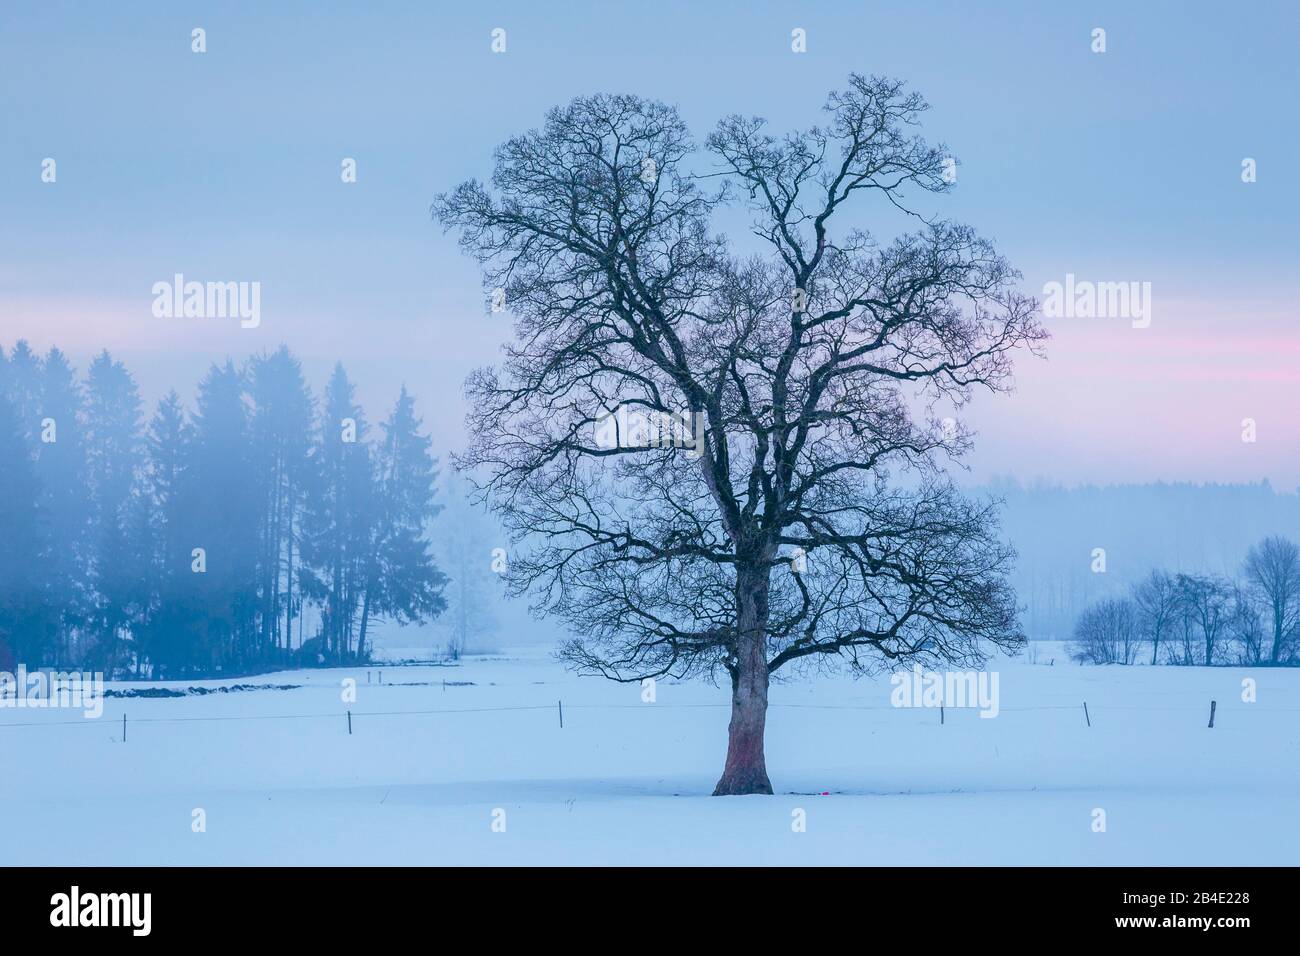 Europa, Deutschland, Bayern, Benediktbeuren, Entlaubter Baum in zartnebliger Winterstimmung nahe dem ehem, Kloster Benediktbeuren, Stock Photo